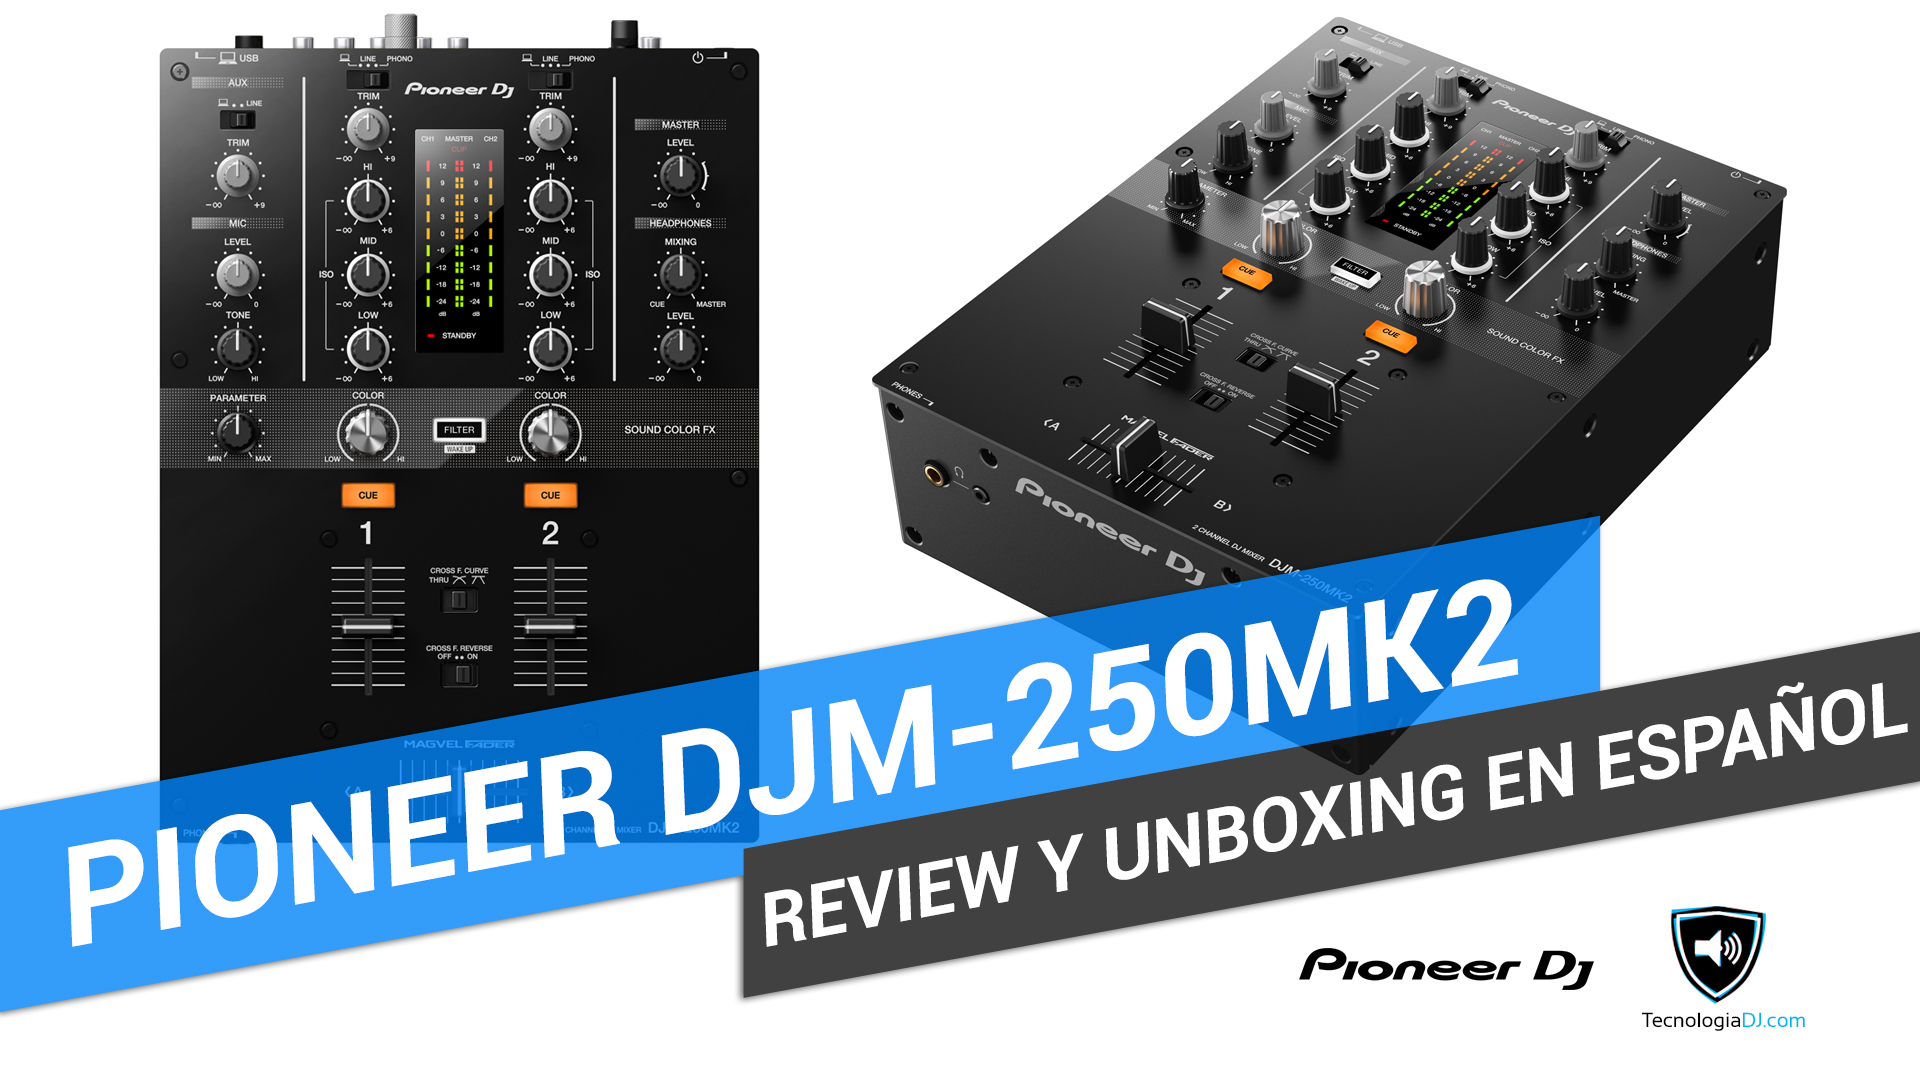 Review y unboxing en español mixer Pioneer DJM-250MK2